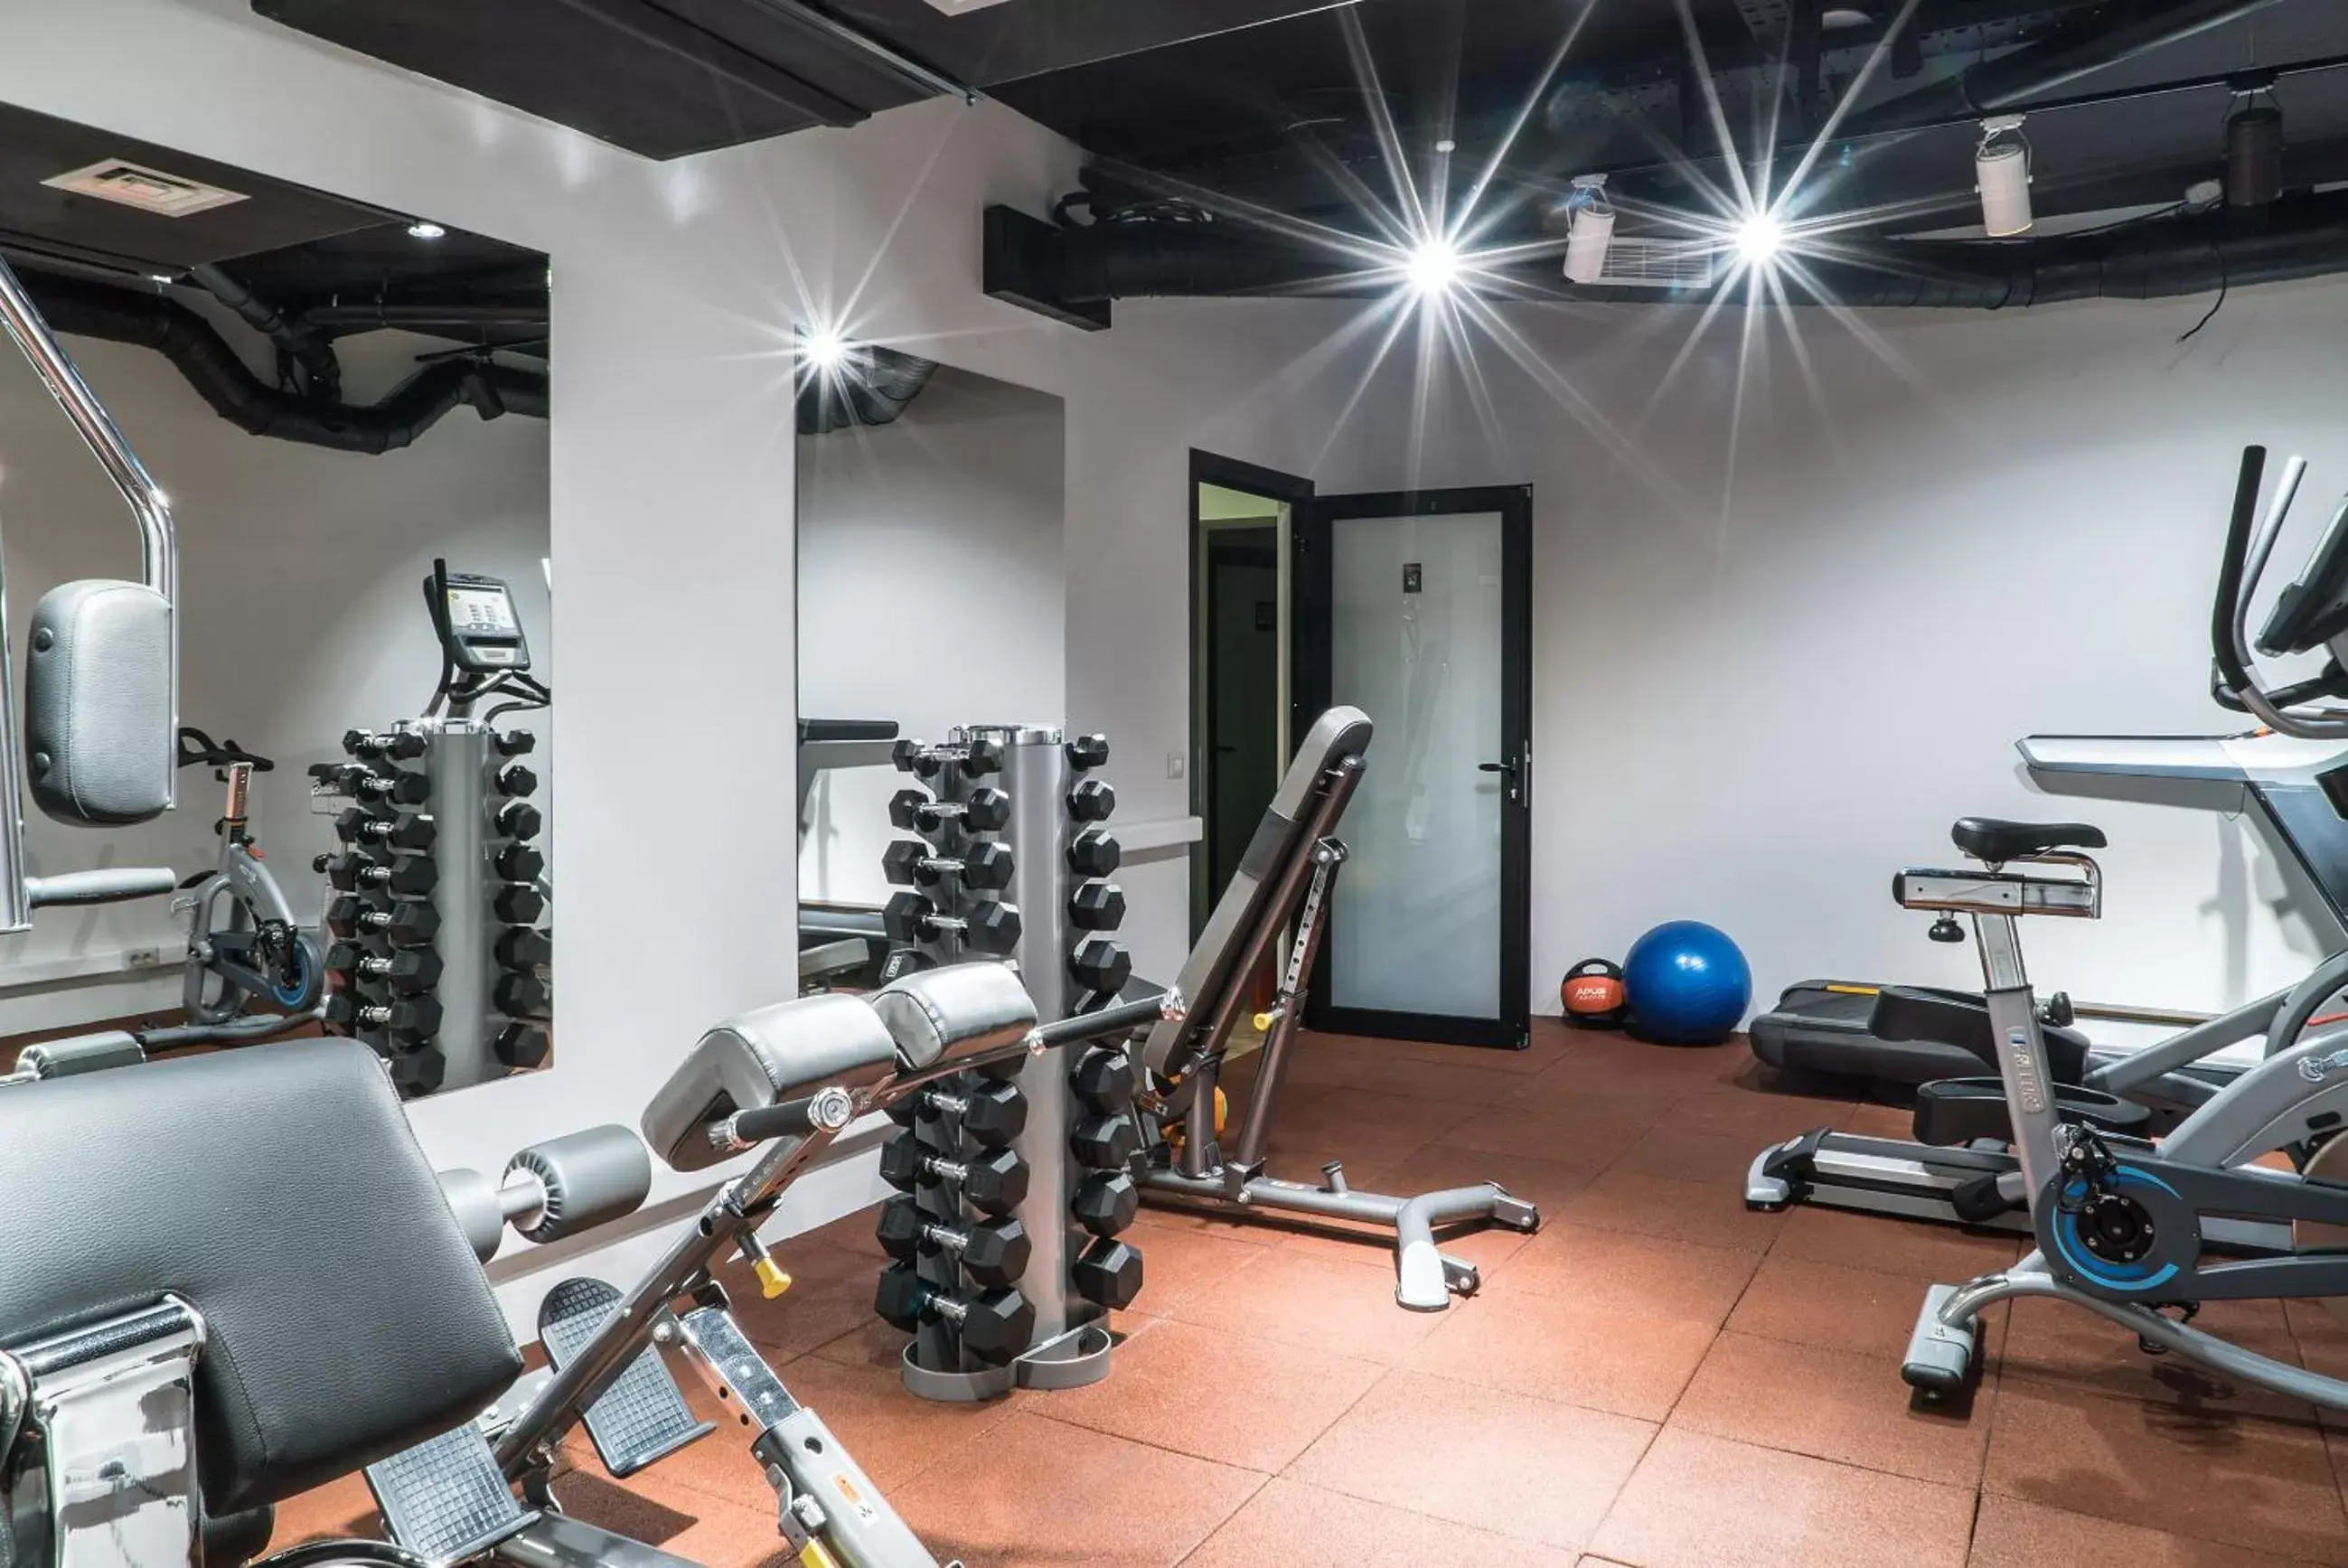 Fitness centre/facilities, Fitness Center/Facilities in Best Western Premier Natalija Residence